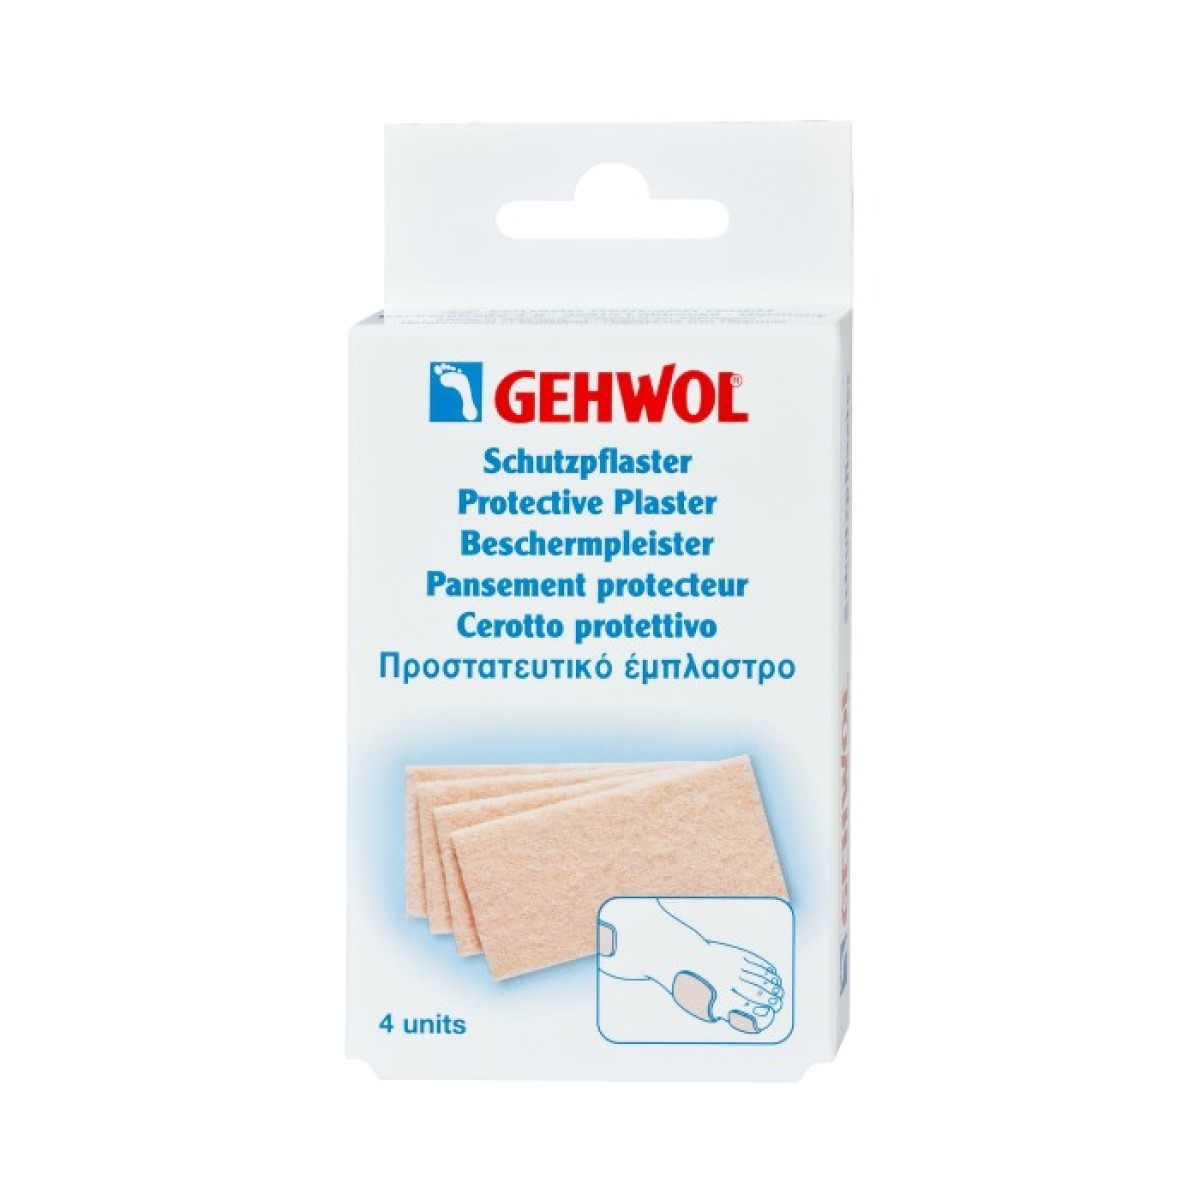 Gehwol | Protective Plaster Thick Παχύ Προστατευτικό Έμπλαστρο | 4τμχ